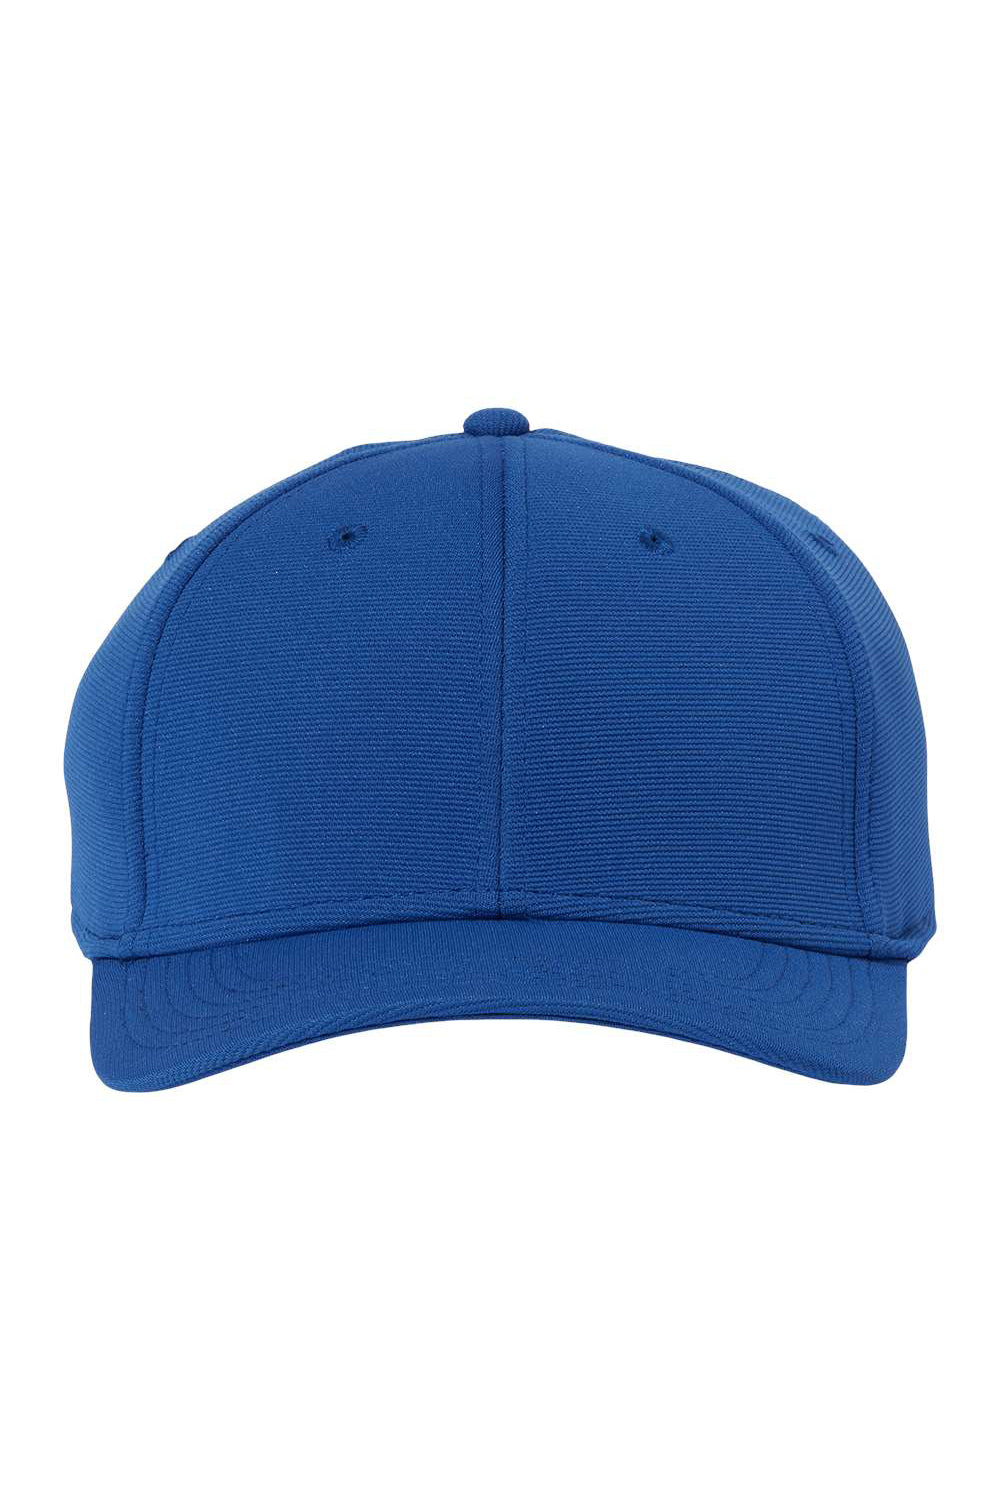 Atlantis Headwear SAND Mens Sustainable Performance Adjustable Hat Royal Blue Flat Front